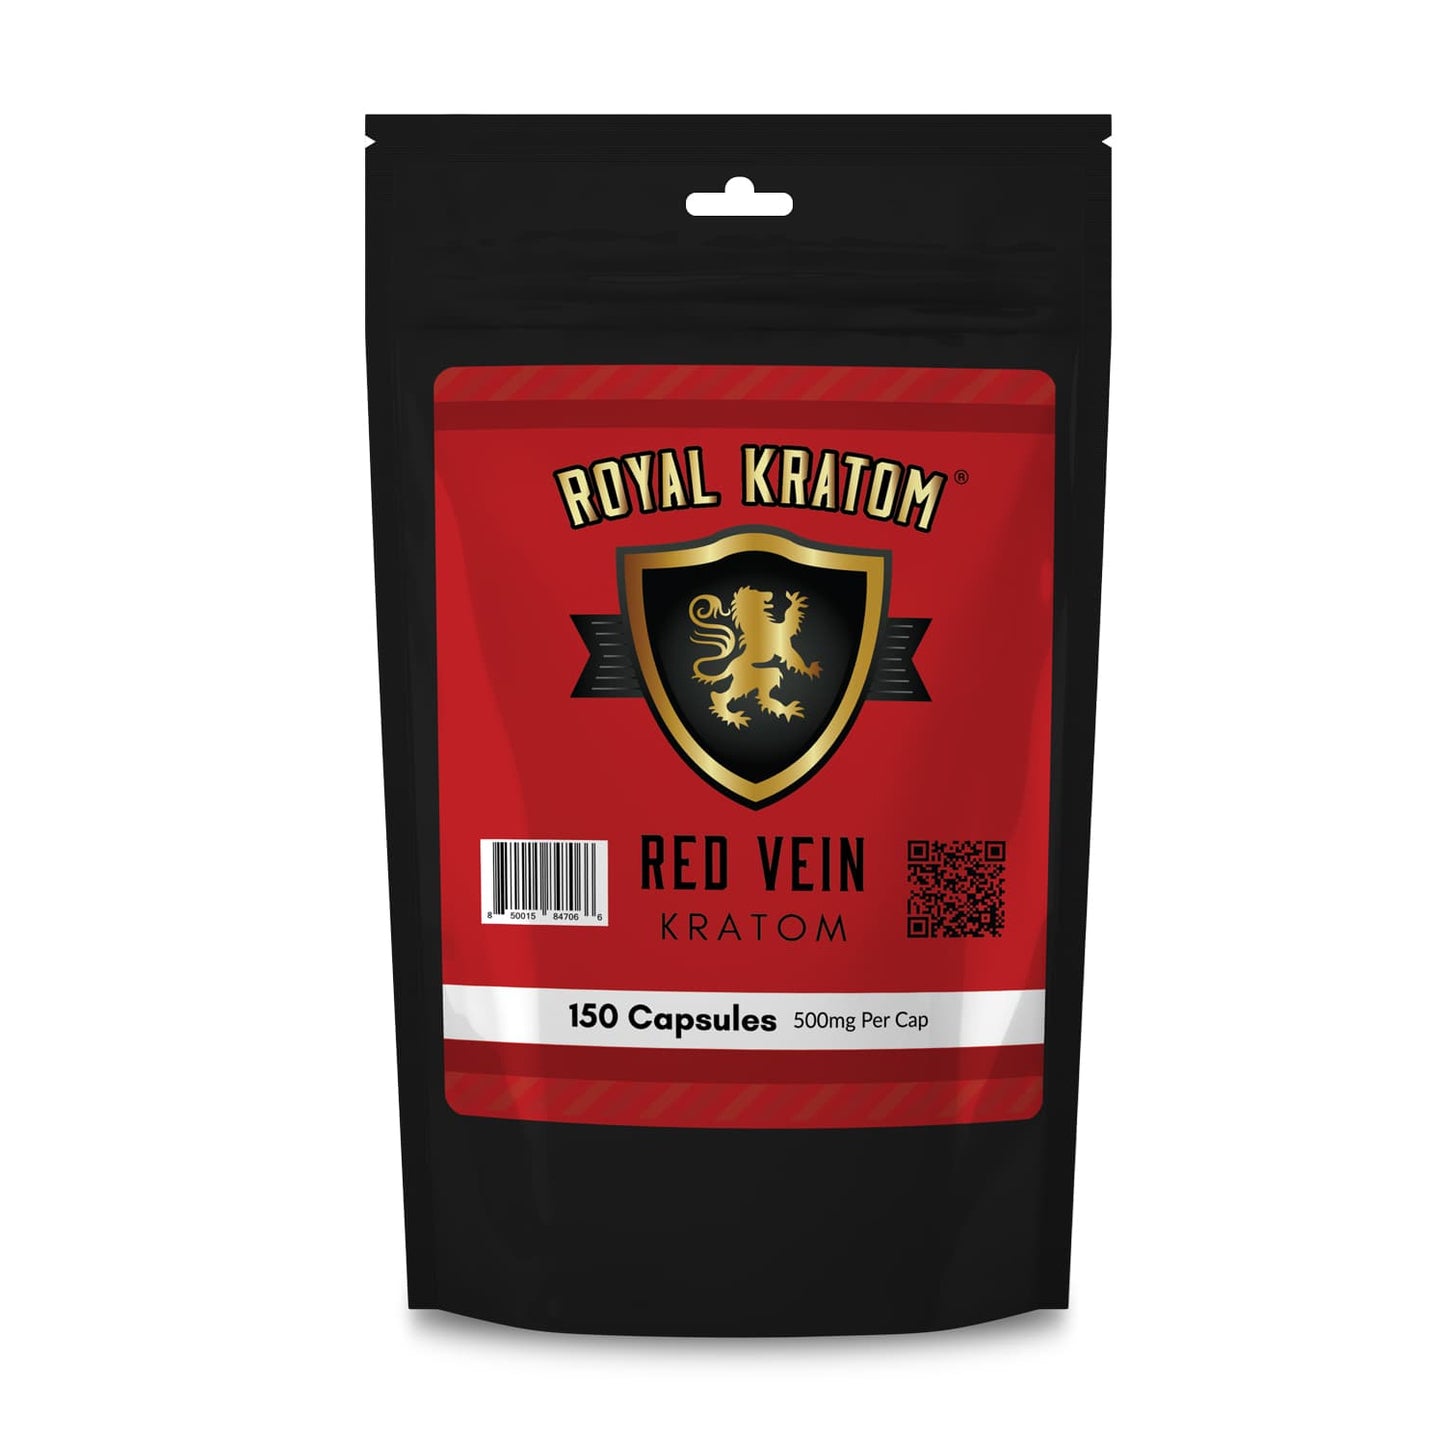 Royal Kratom Red Vein Kratom Capsules 150 Count front of package